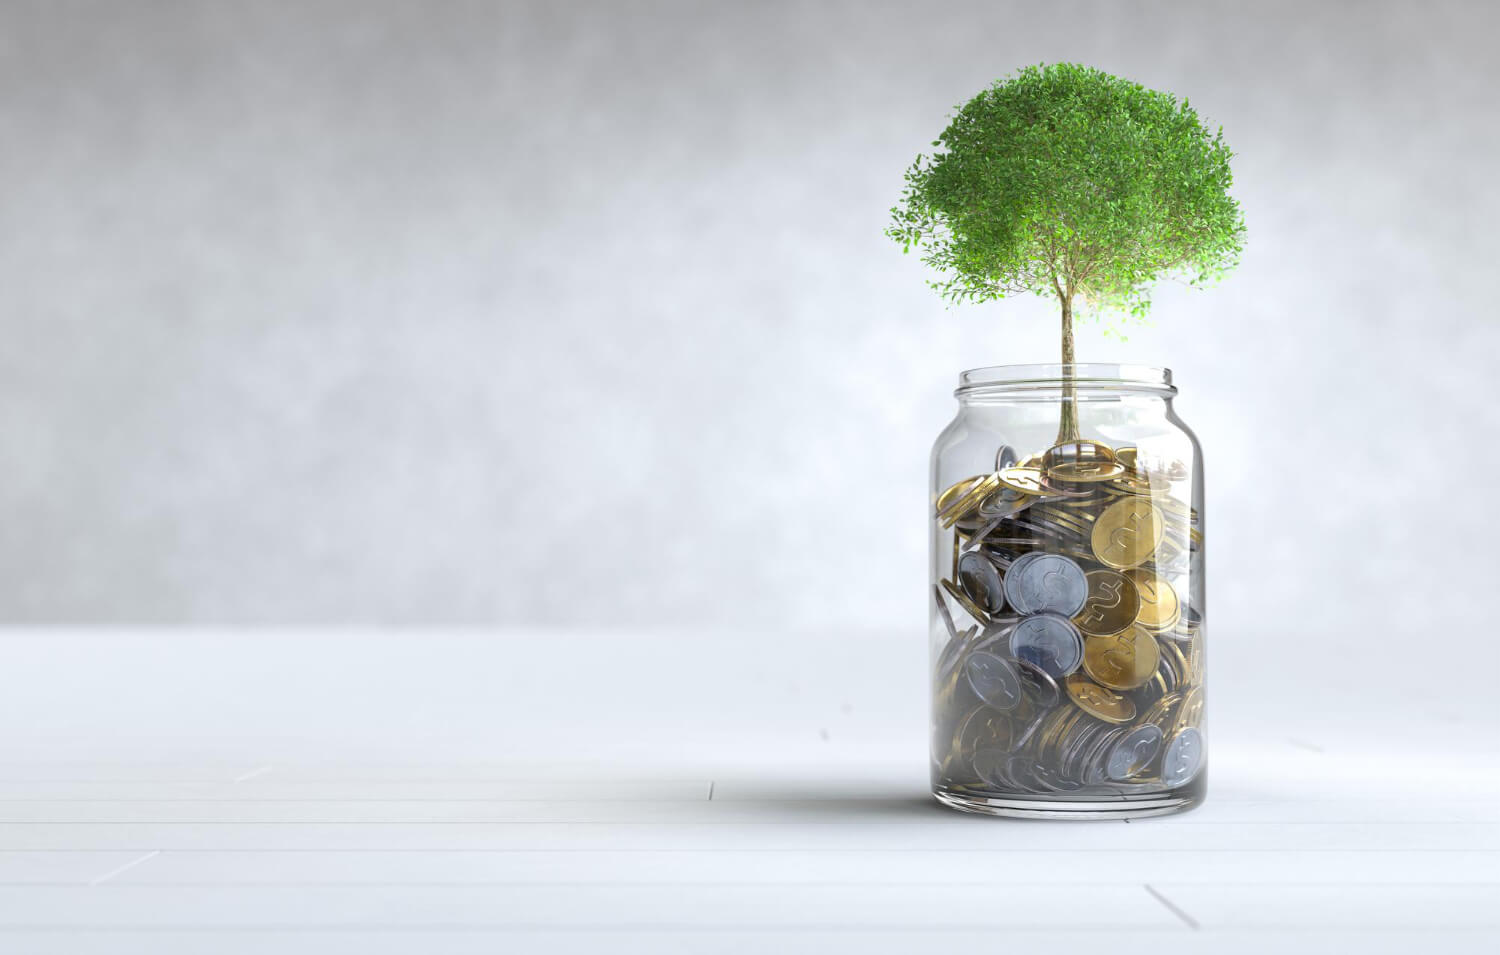 tree-grows-coin-glass-jar